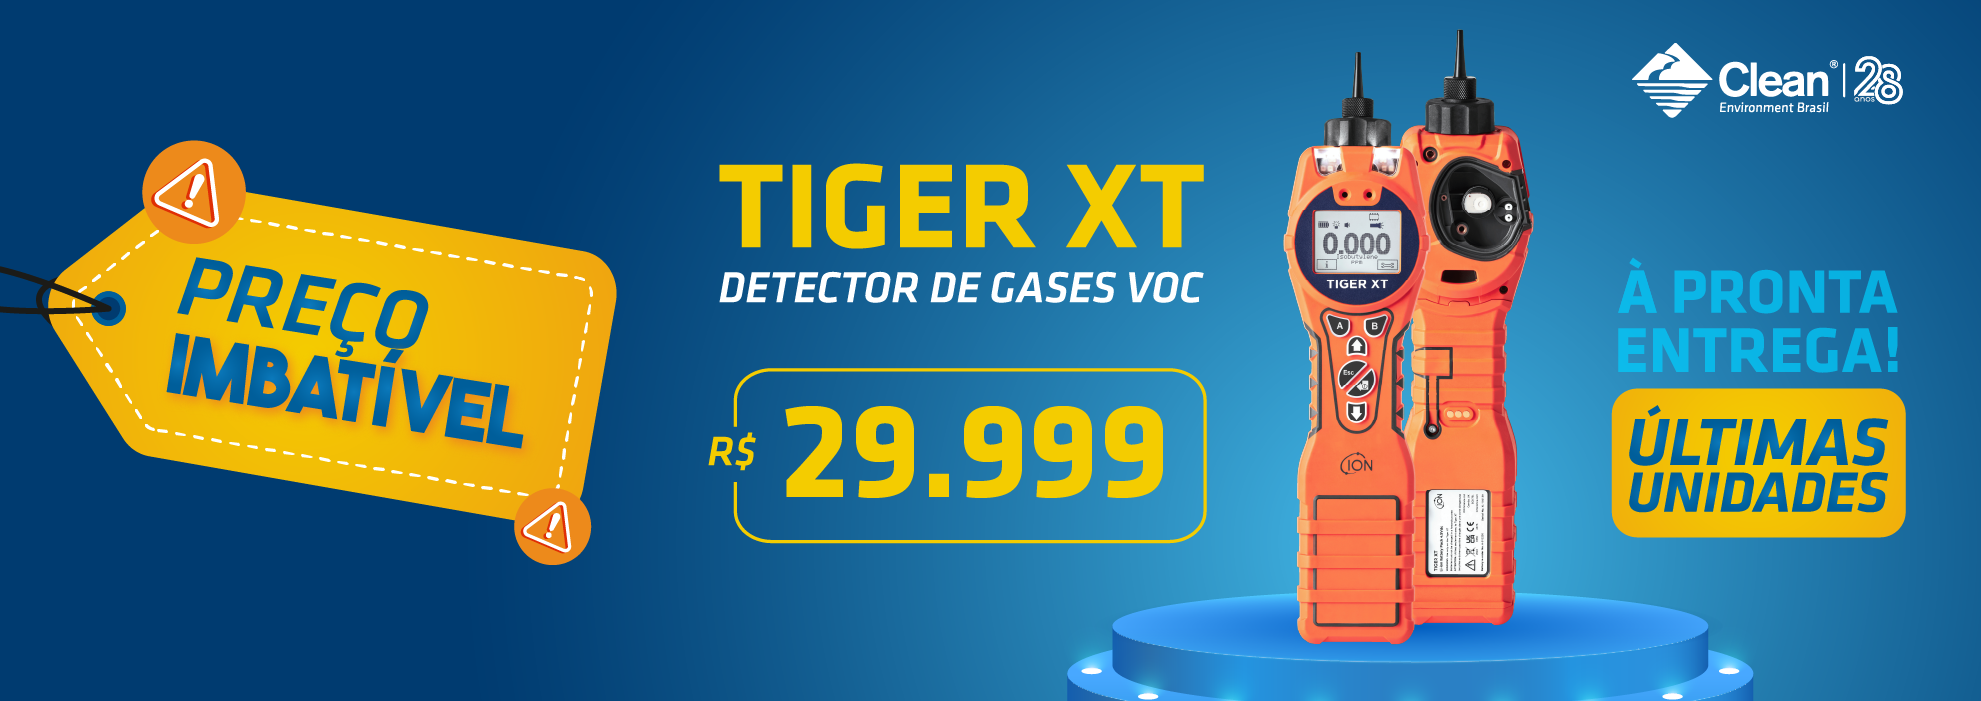 Preço Imbatível - Tiger XT 